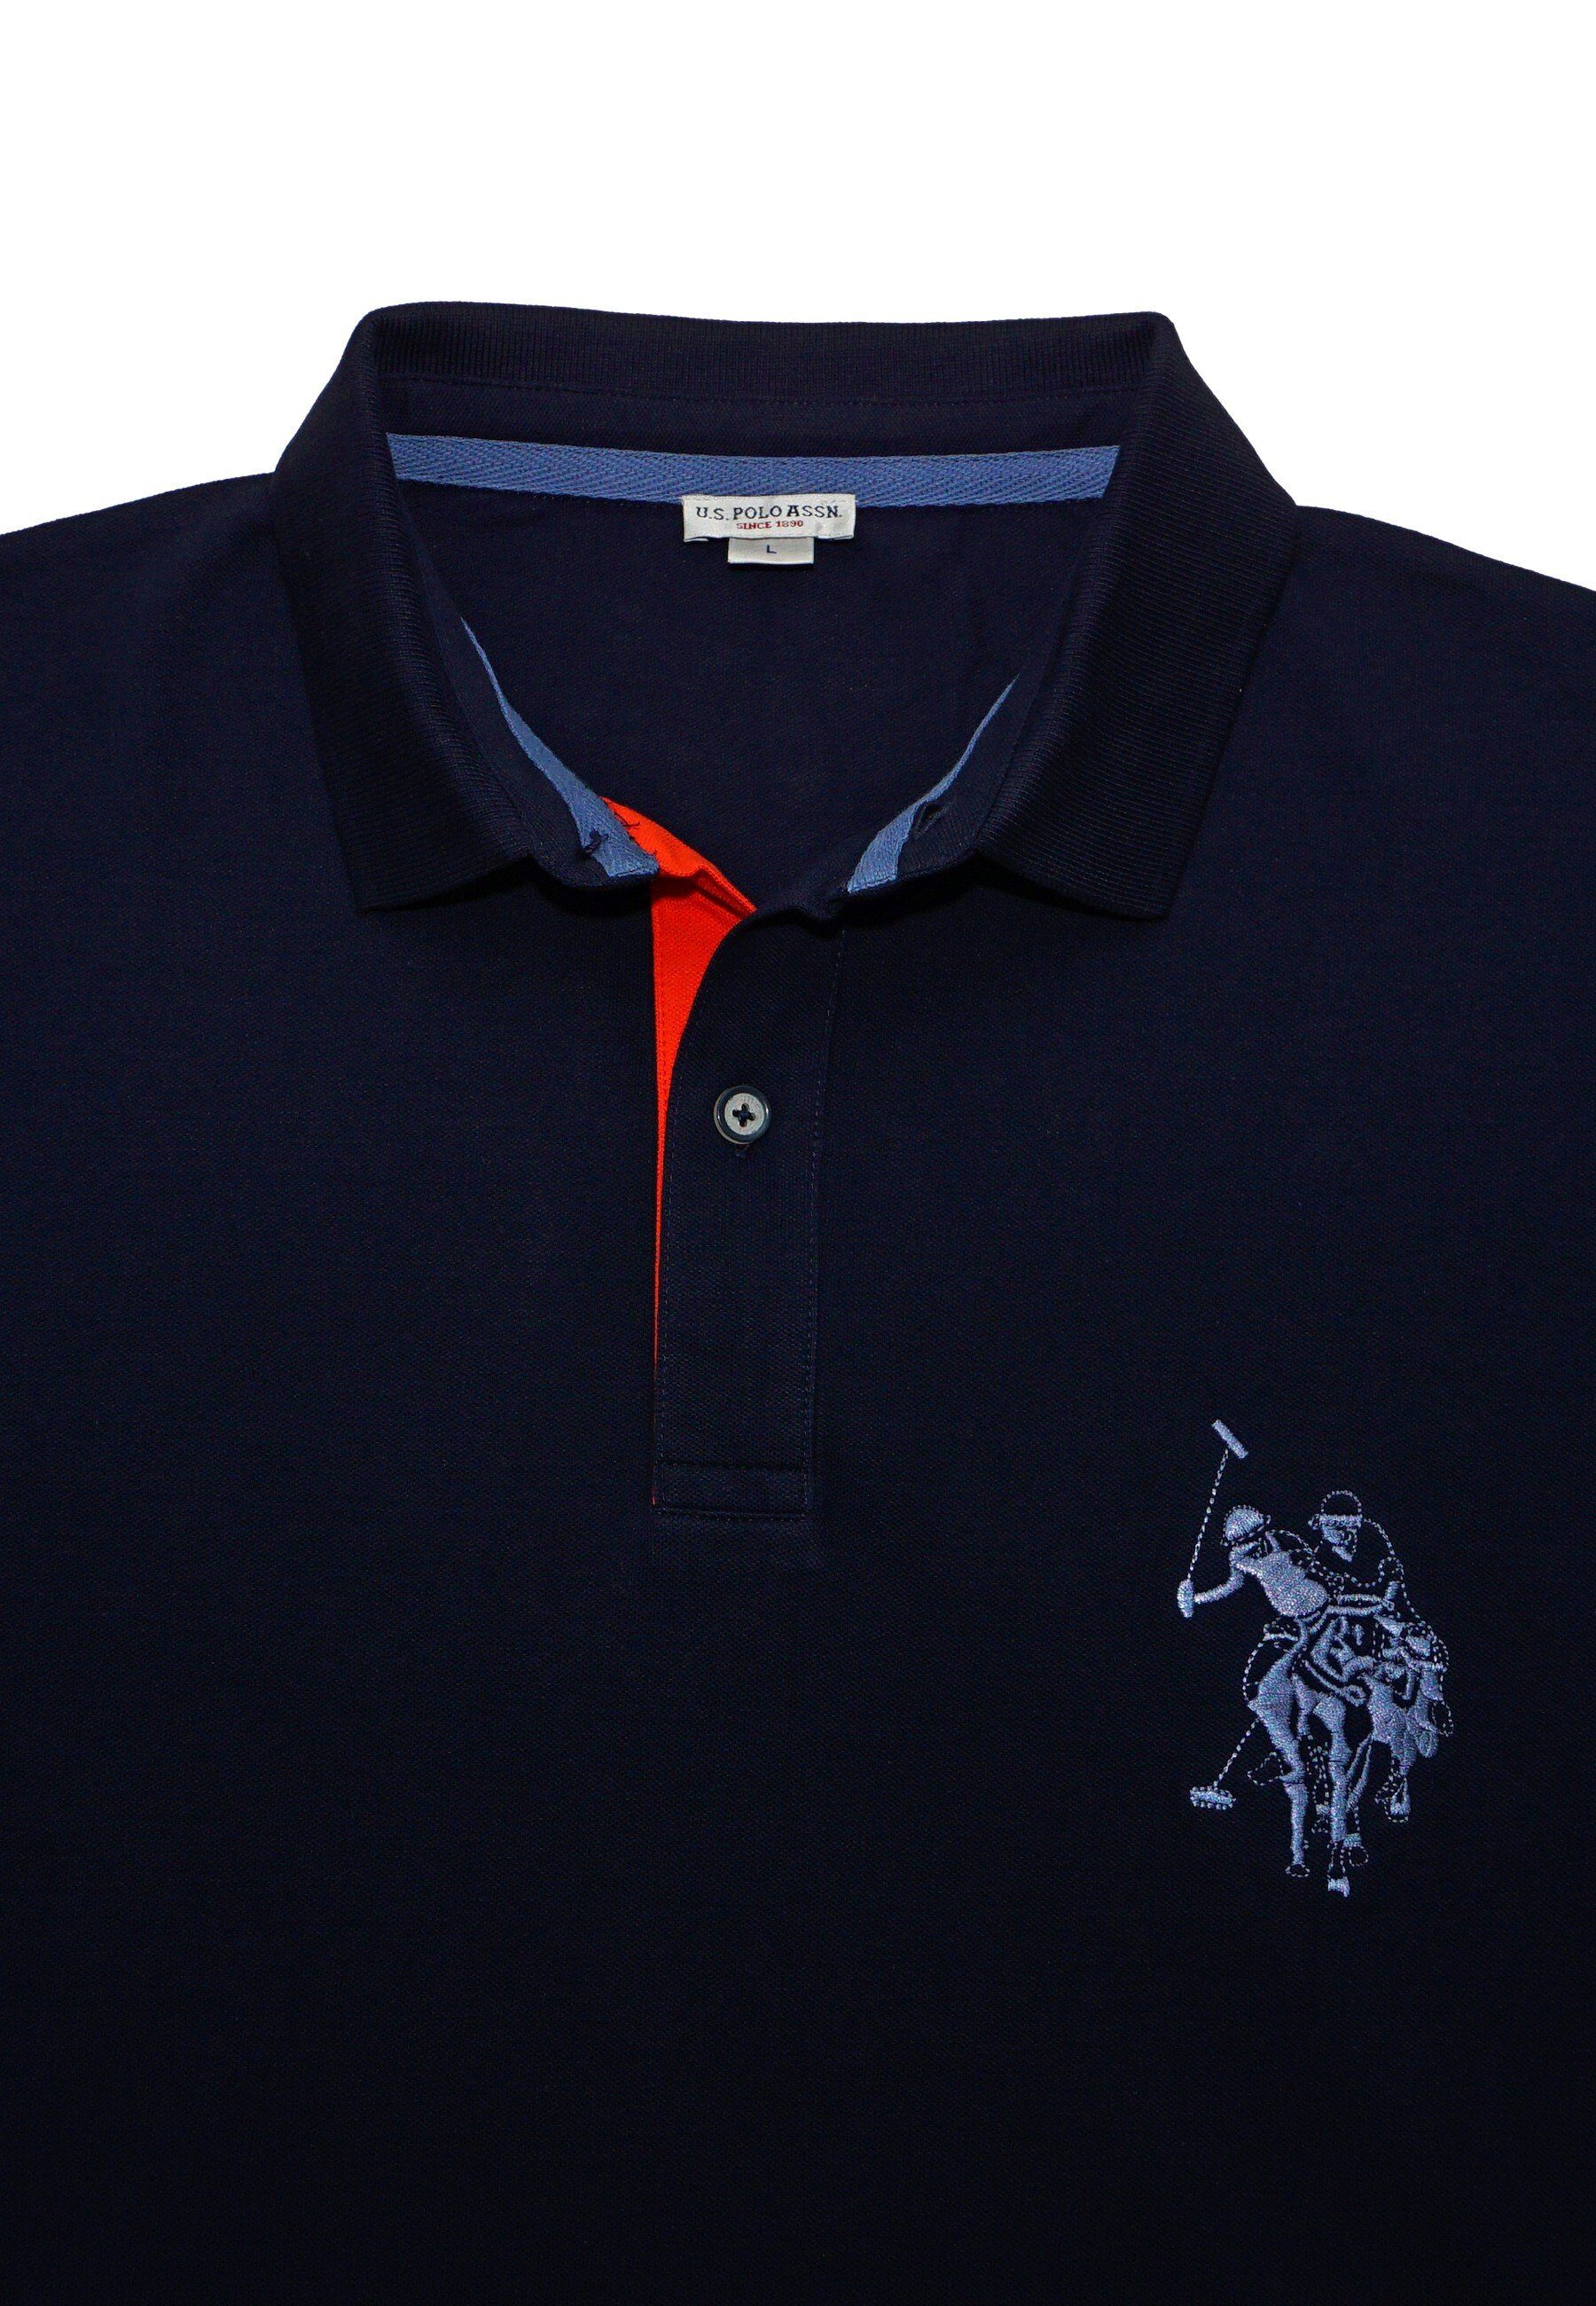 U.S. Polo Assn Shirt Poloshirt Poloshirt dunkelblau Langarm